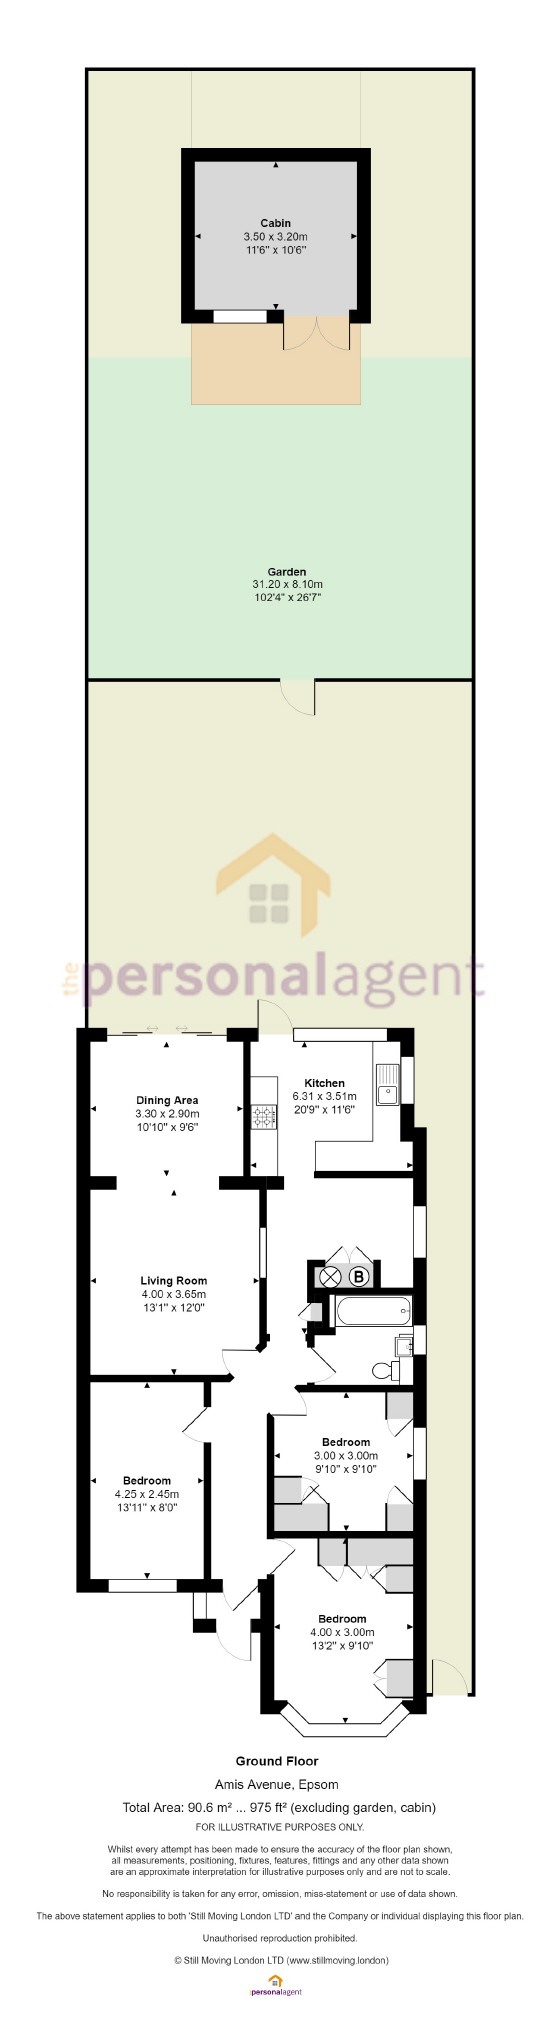 2 Bedrooms Semi-detached bungalow for sale in Amis Avenue, Epsom, Surrey KT19